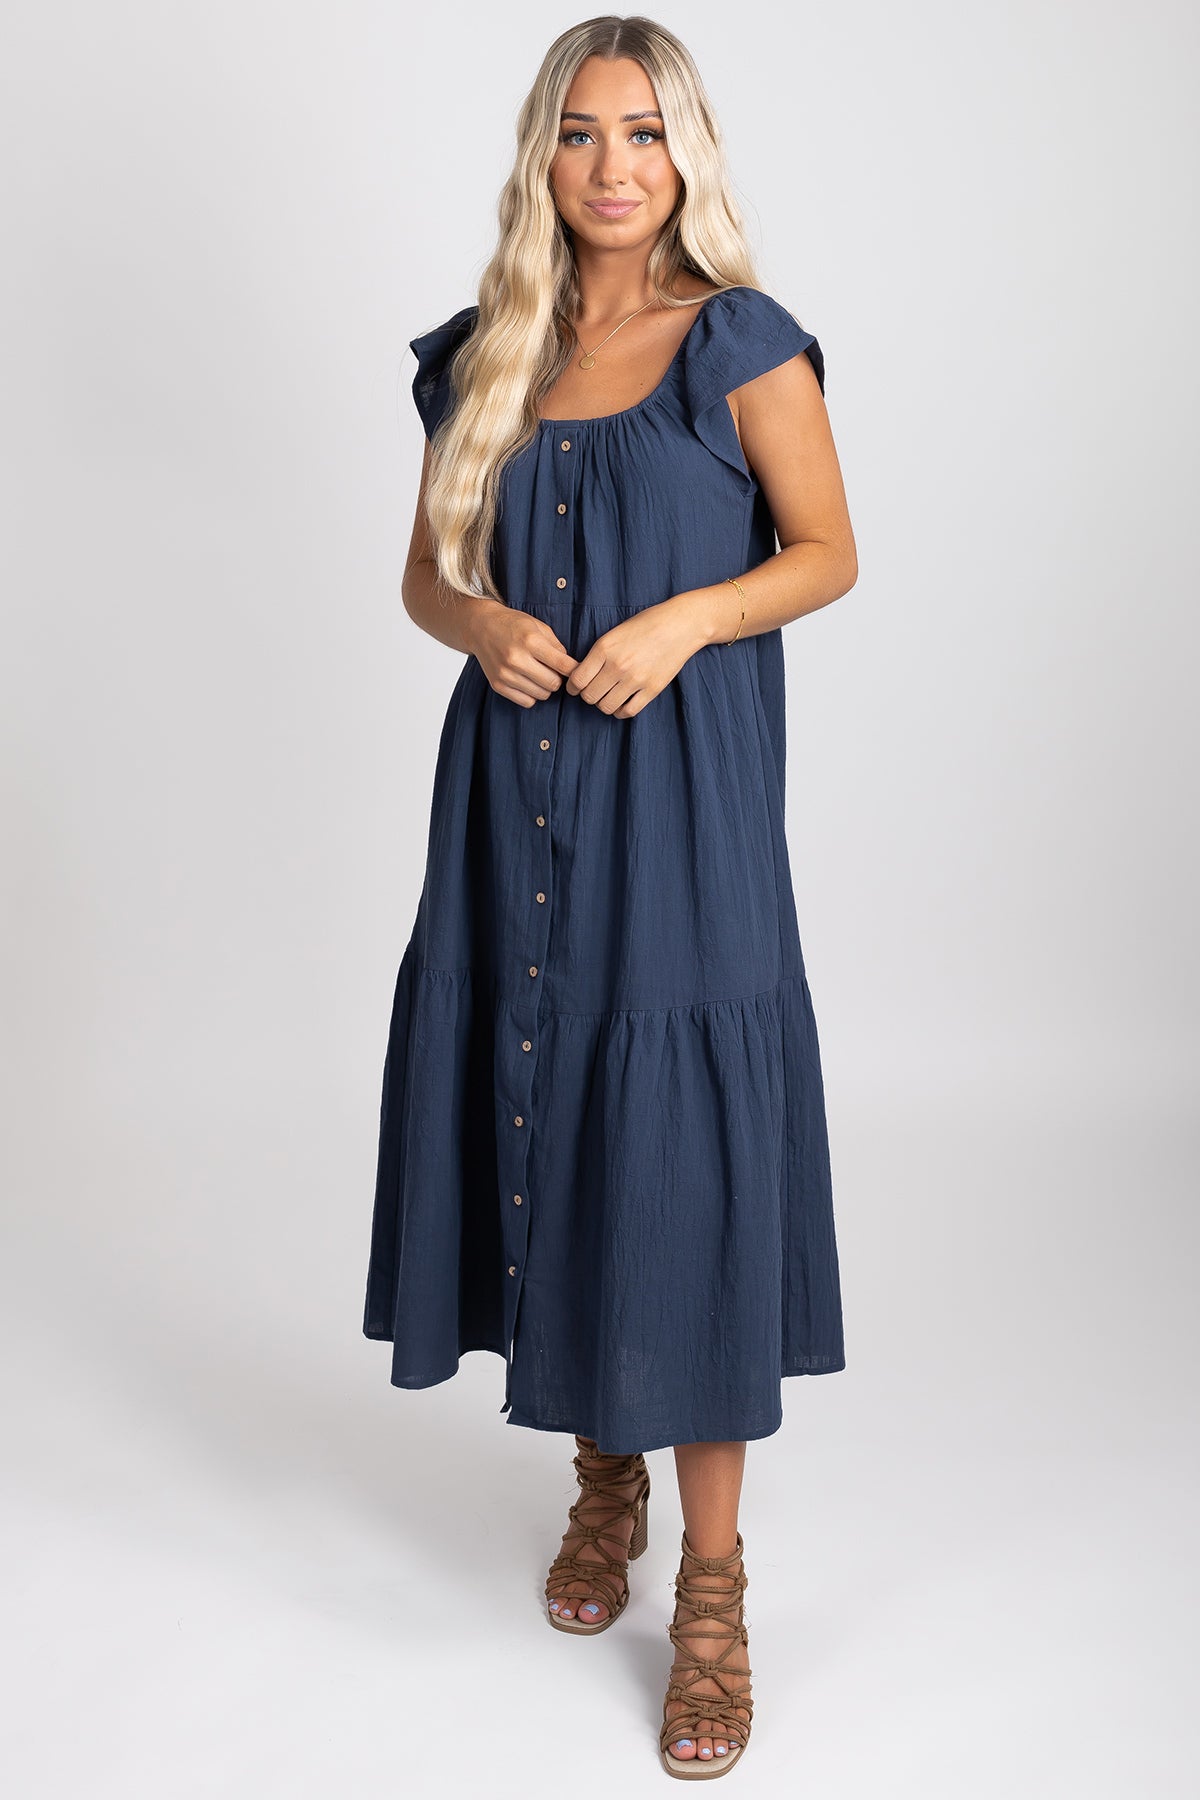 Women's Boutique Navy Blue Midi Dress